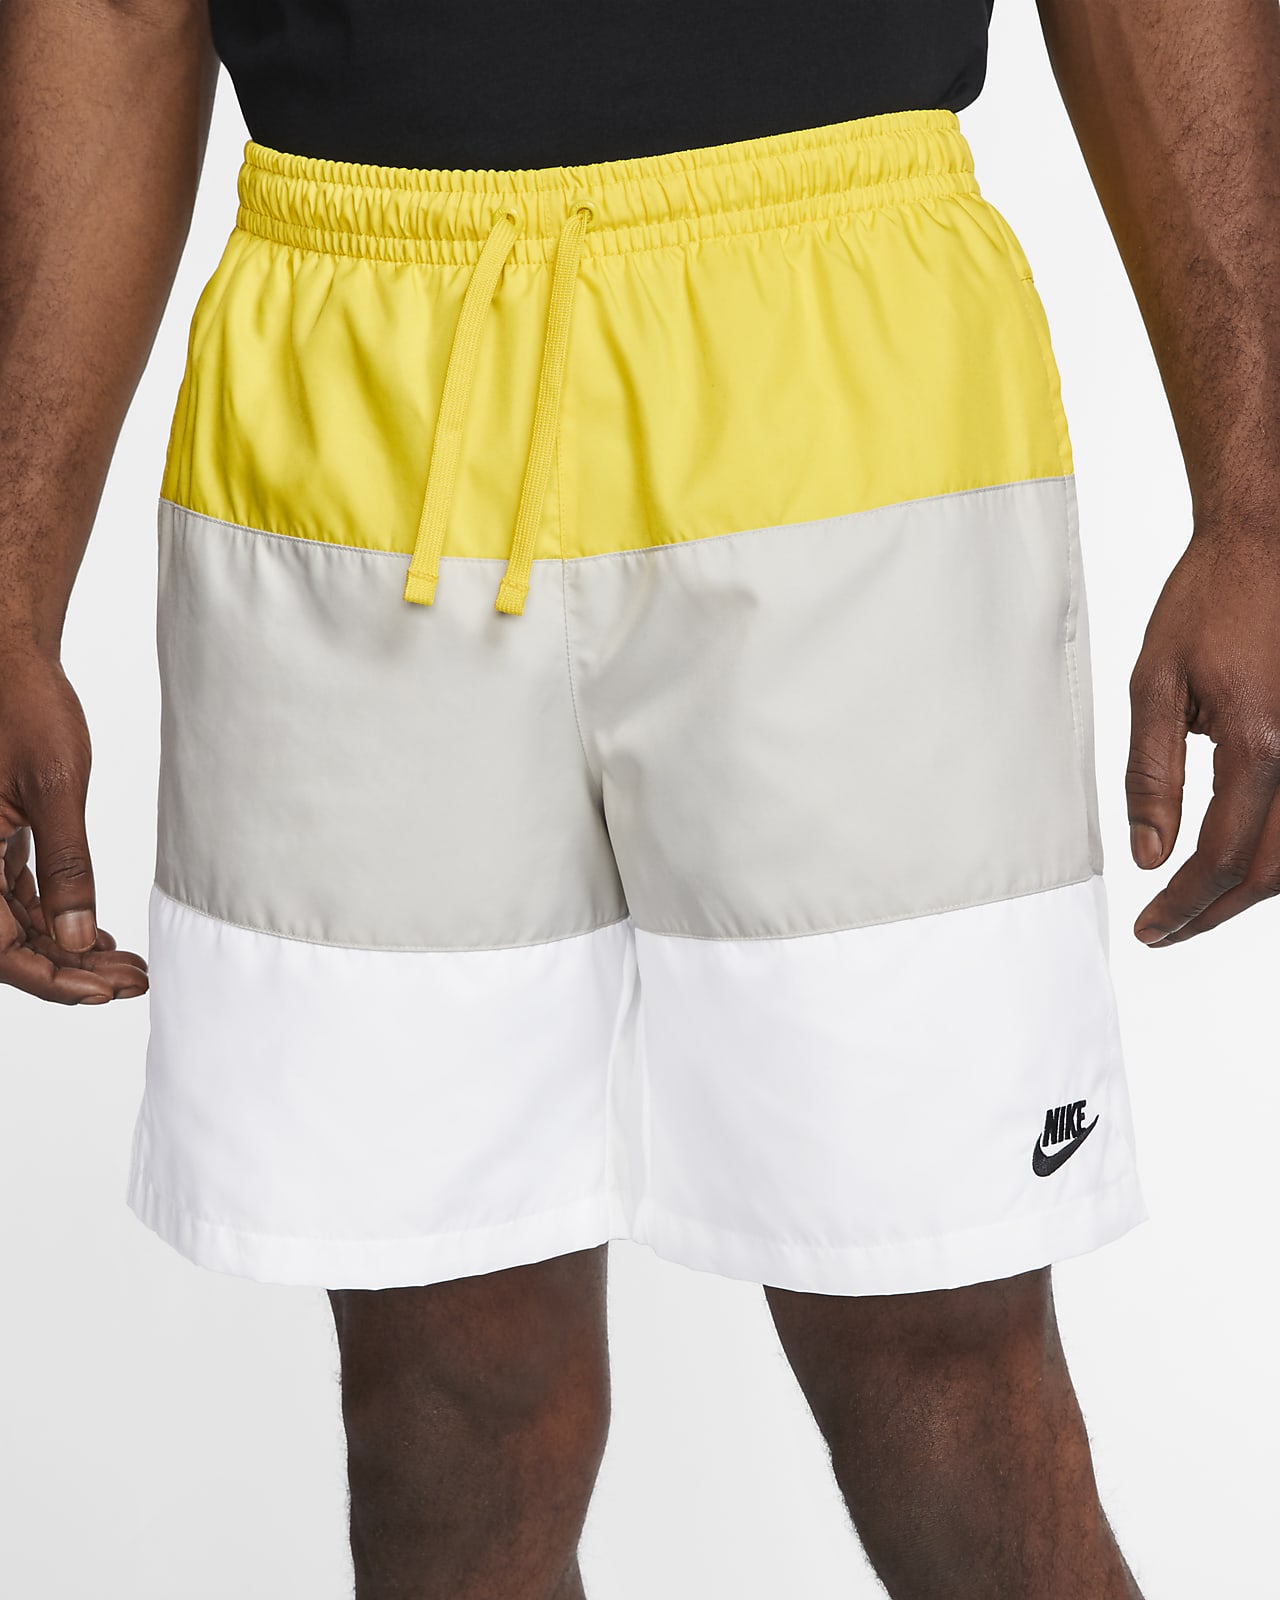 Download Nike Sportswear City Edition Men's Woven Shorts. Nike GB